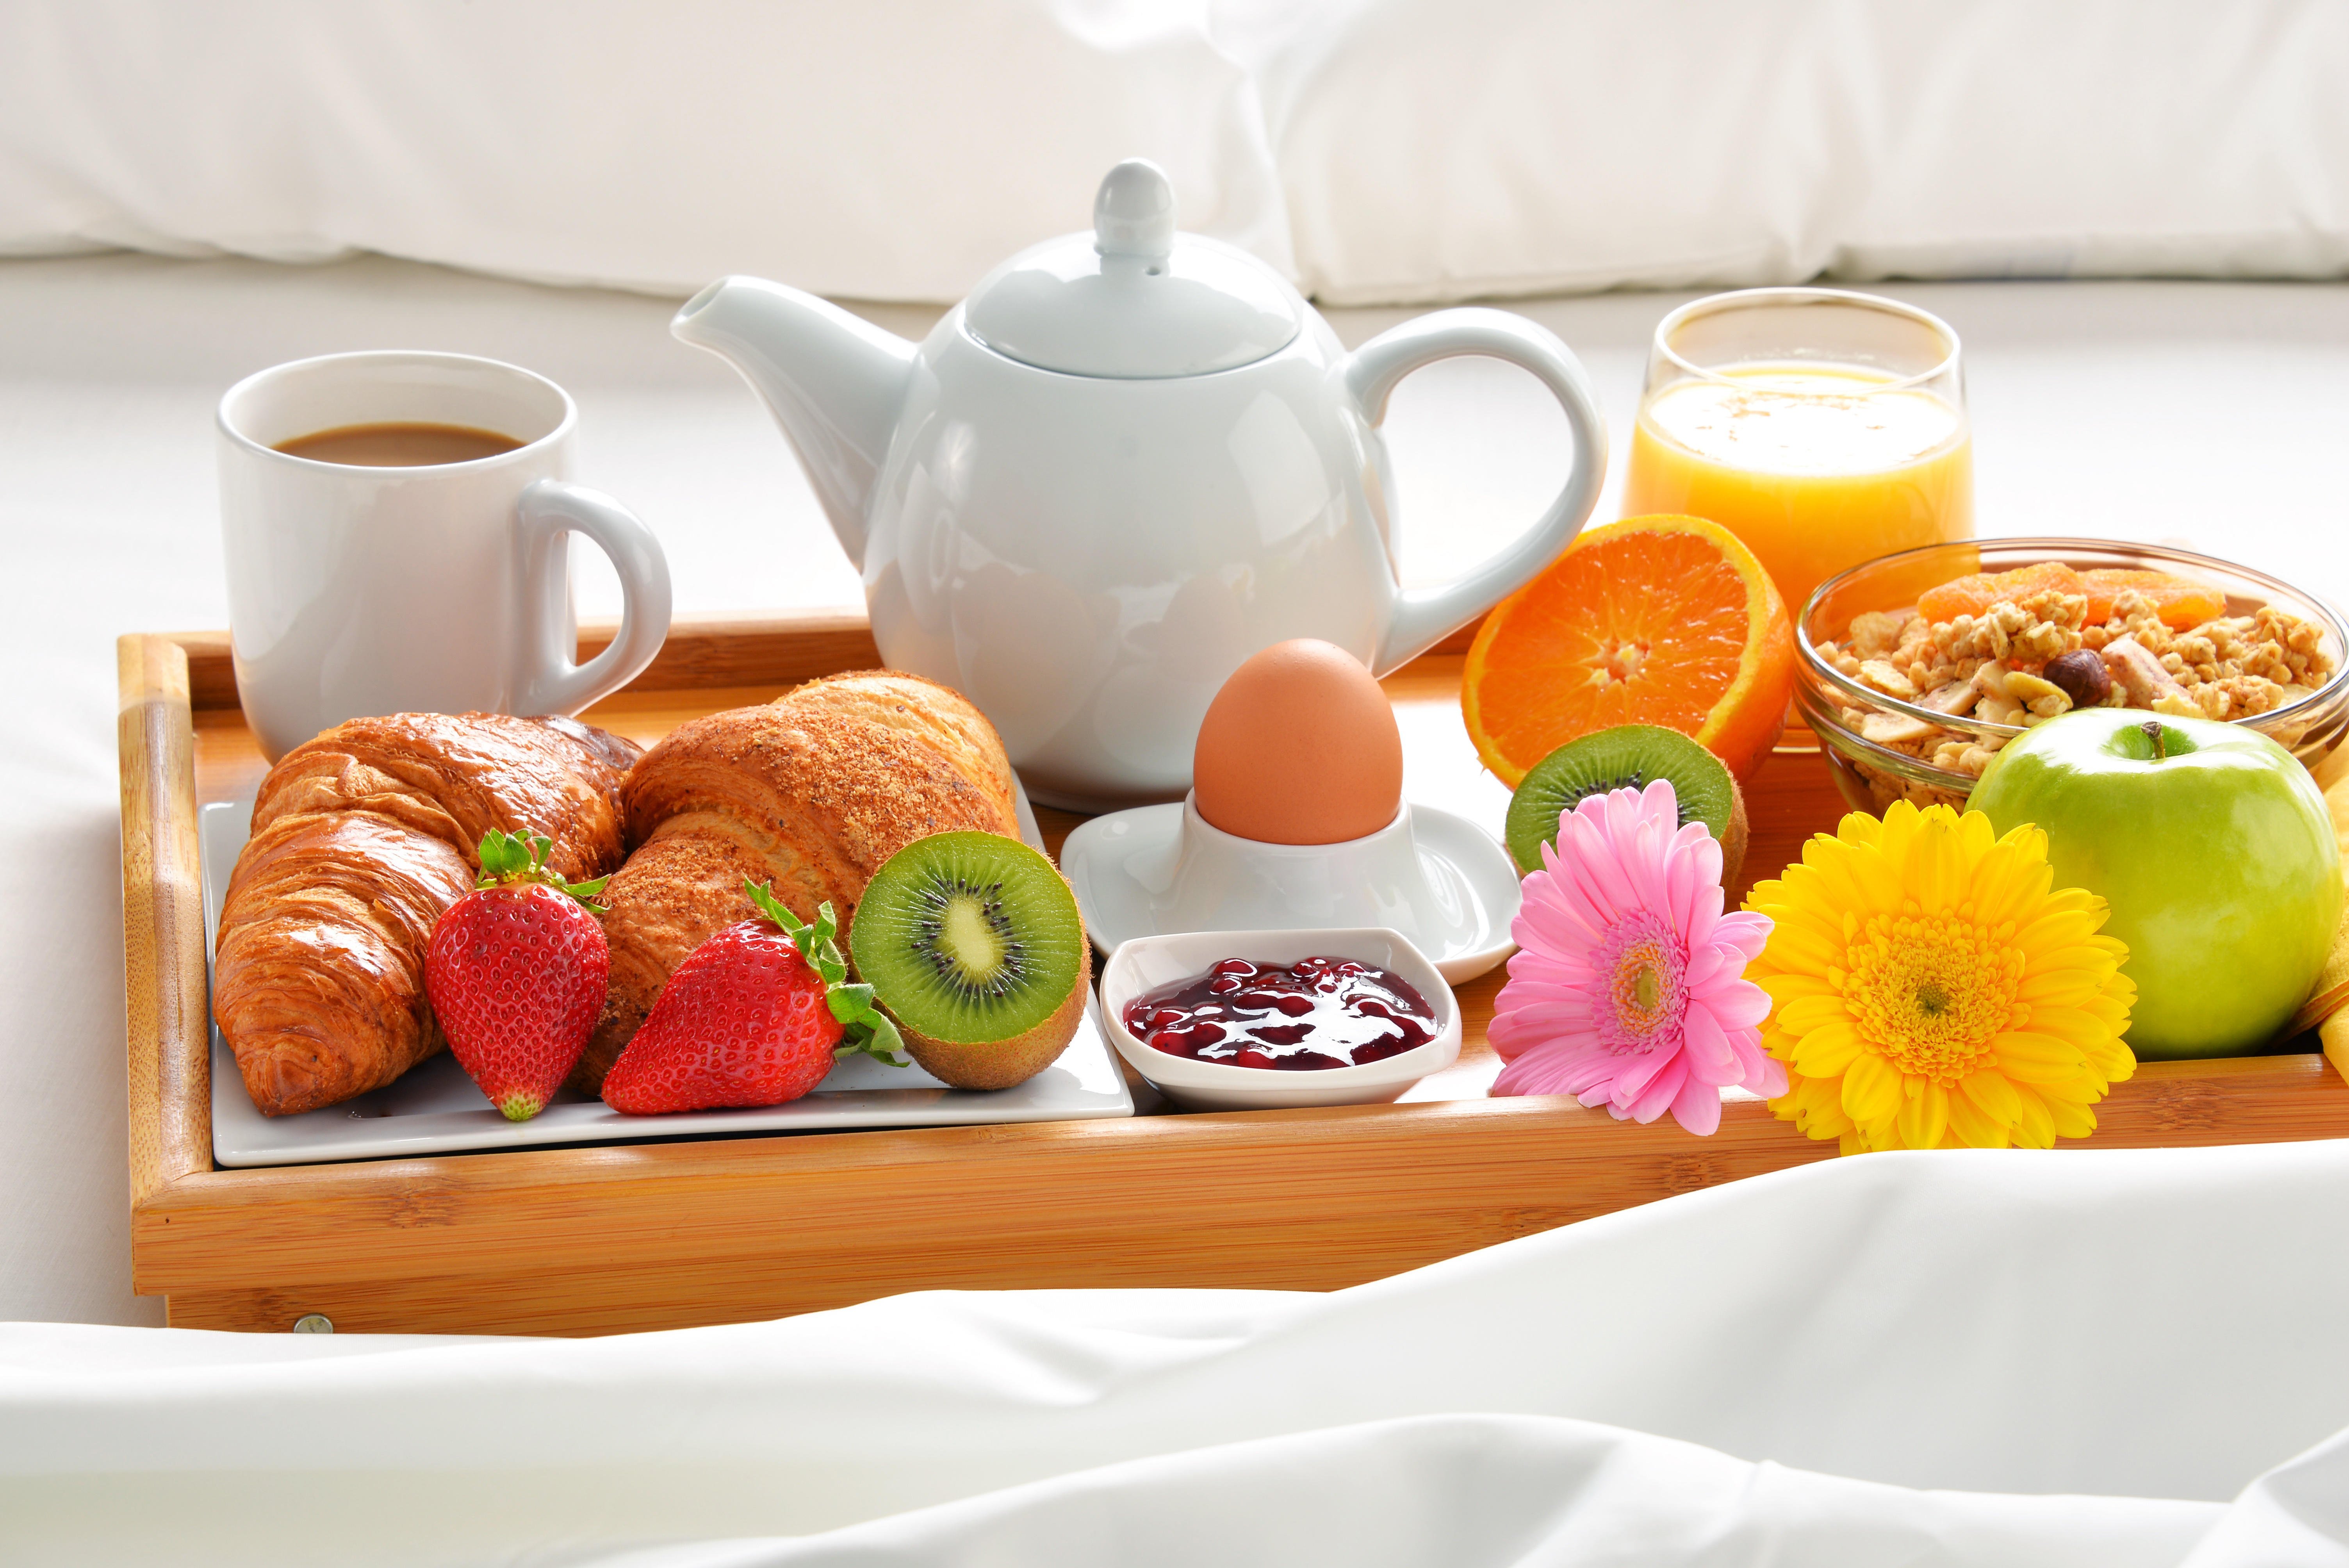 Картинка утро. Утренний завтрак. Завтрак в постель. Красивый утренний завтрак. Доброе утро завтрак.